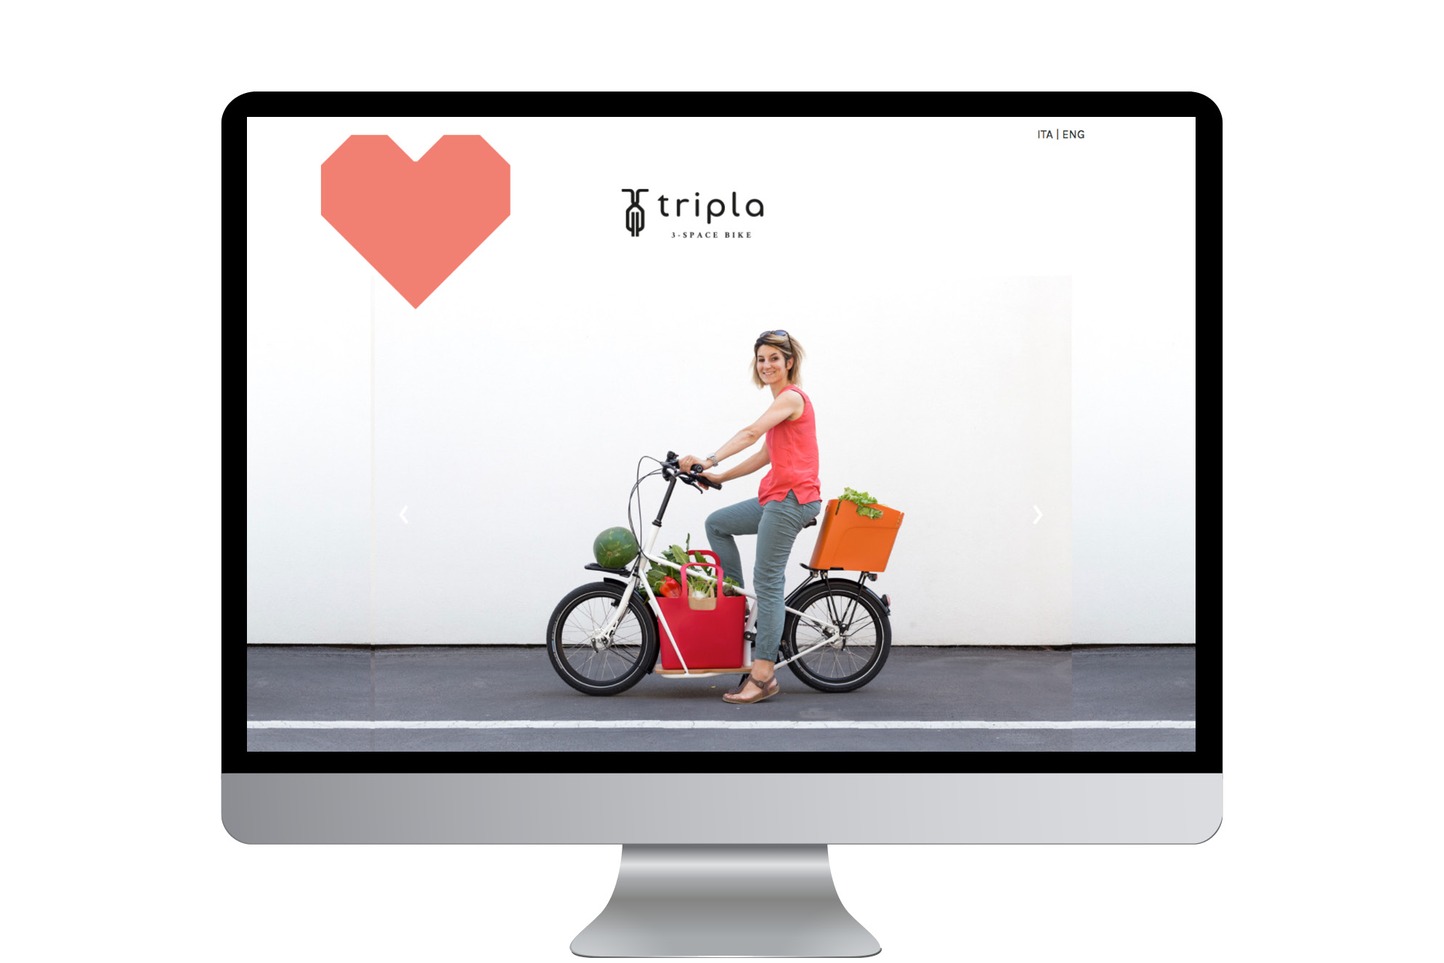 Web Tripla 3-Space Bike